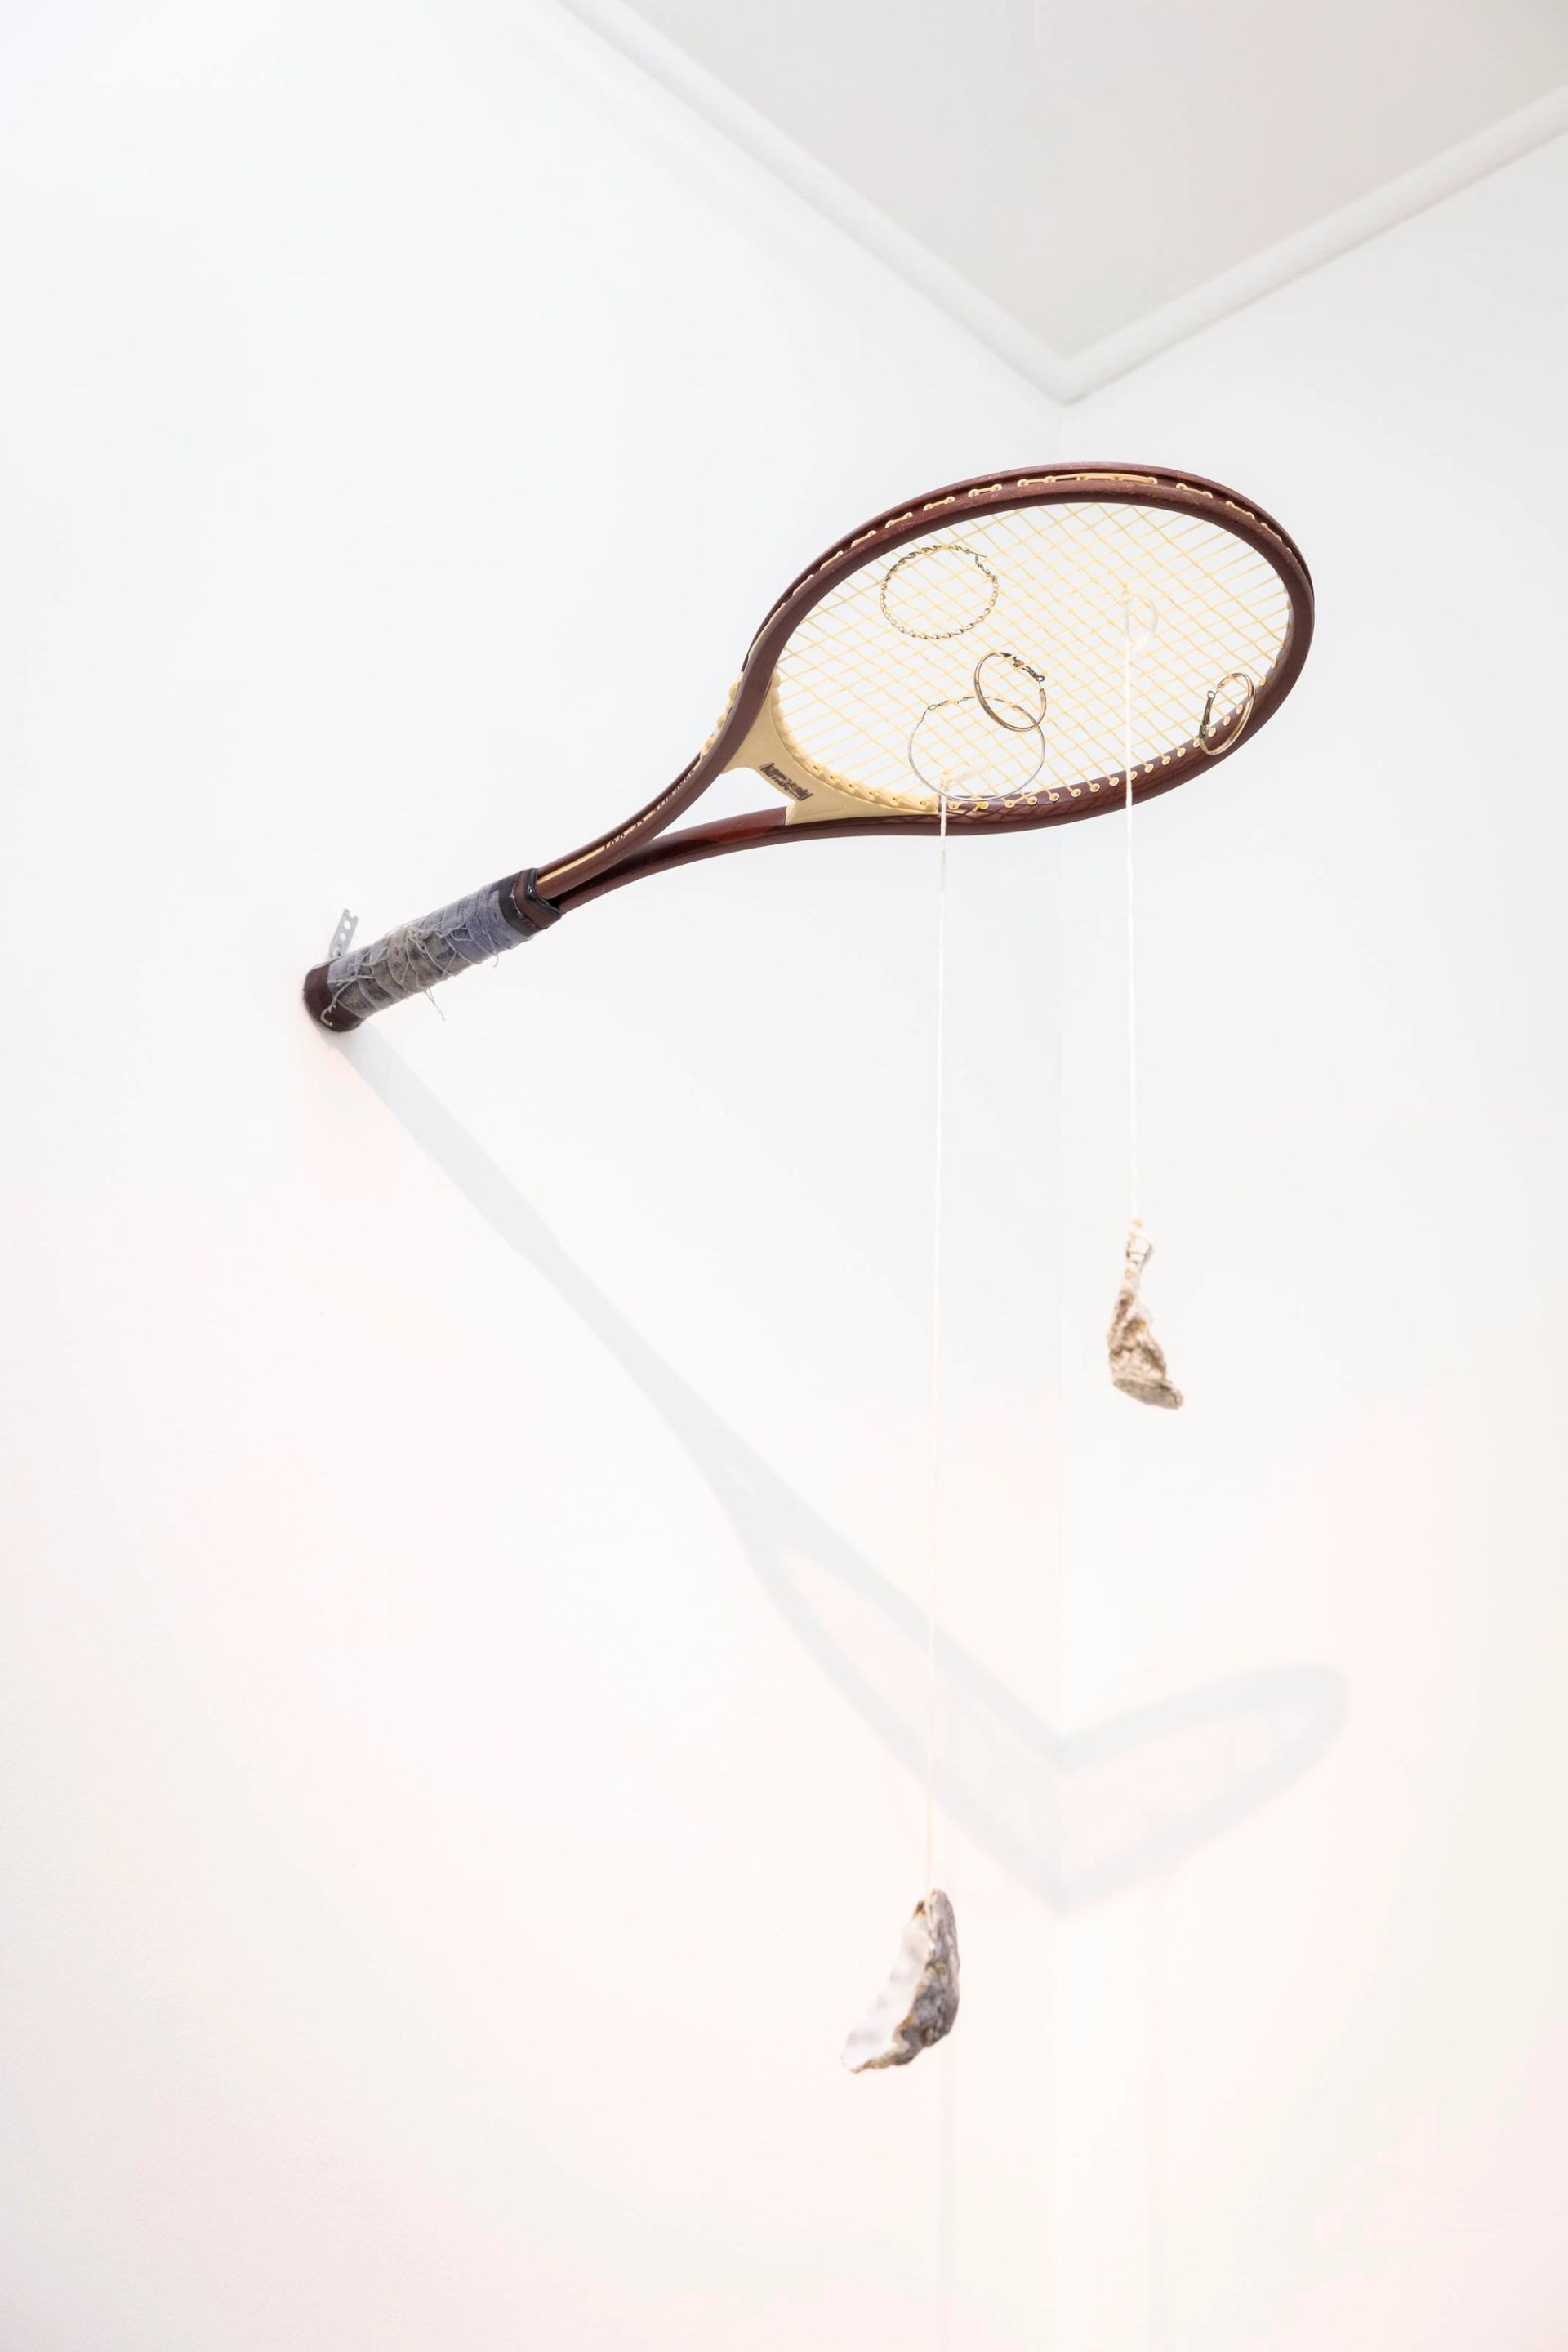 Anna McCarthy, Oyster Tennis, 2020, Tennis racket, jewellery, string, oyster shells, 70 × 60 × 25 cm